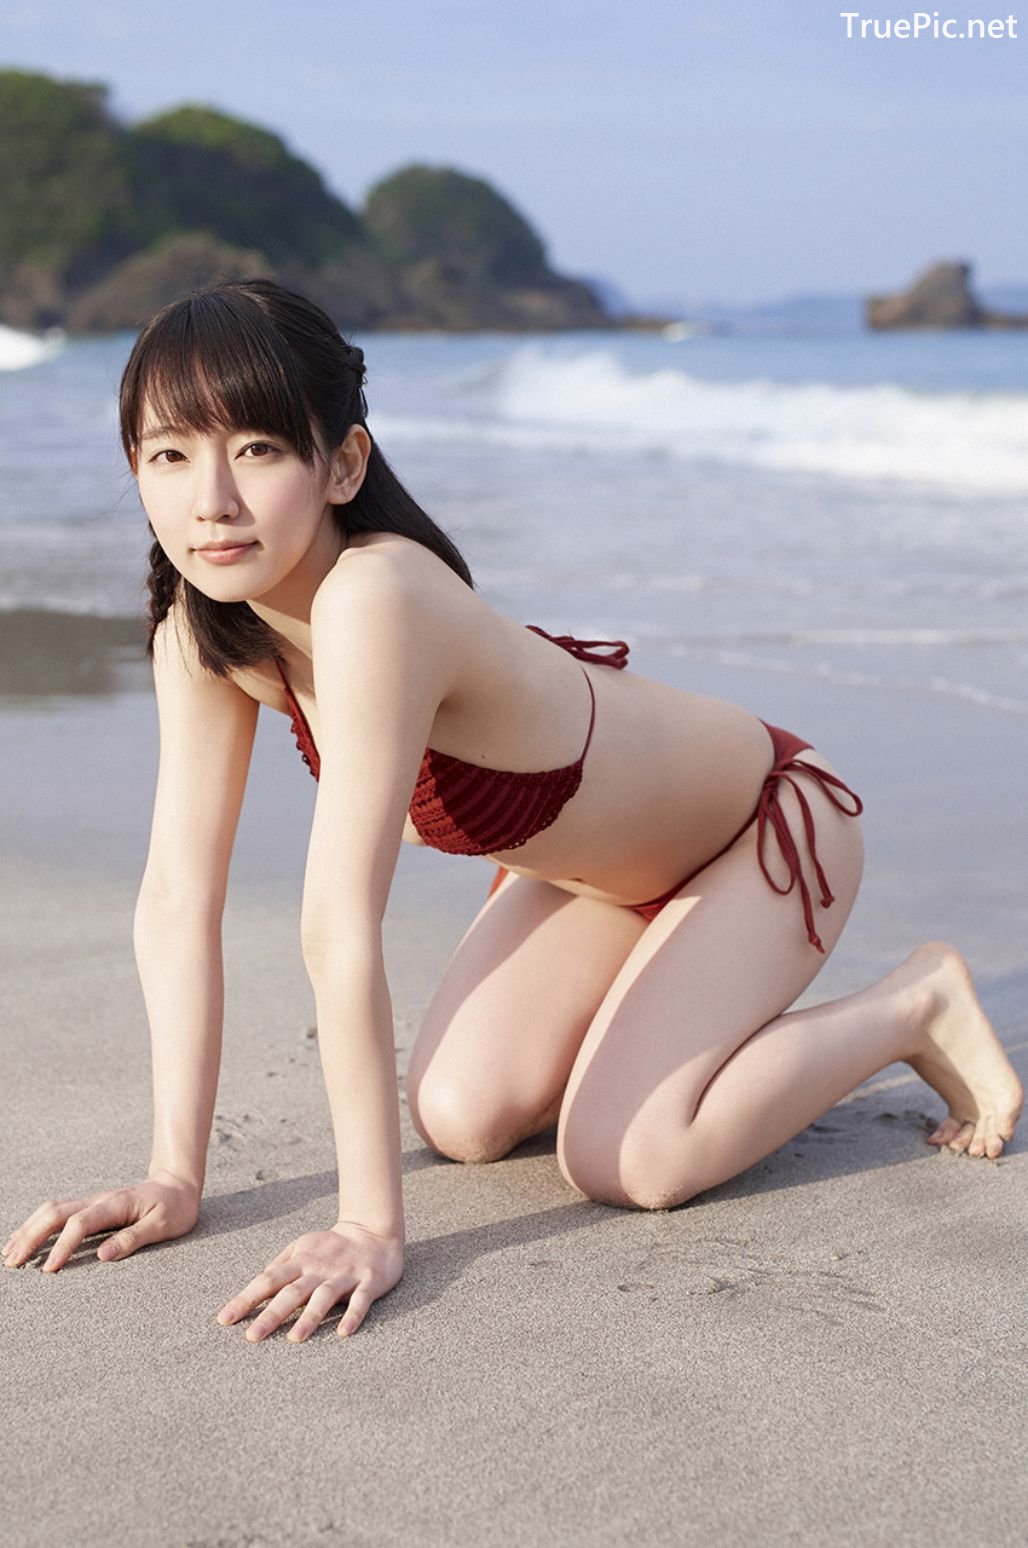 Image-Japanese-Actress-And-Model-Riho-Yoshioka-Pure-Beauty-Of-Sea-Goddess-TruePic.net- Picture-81